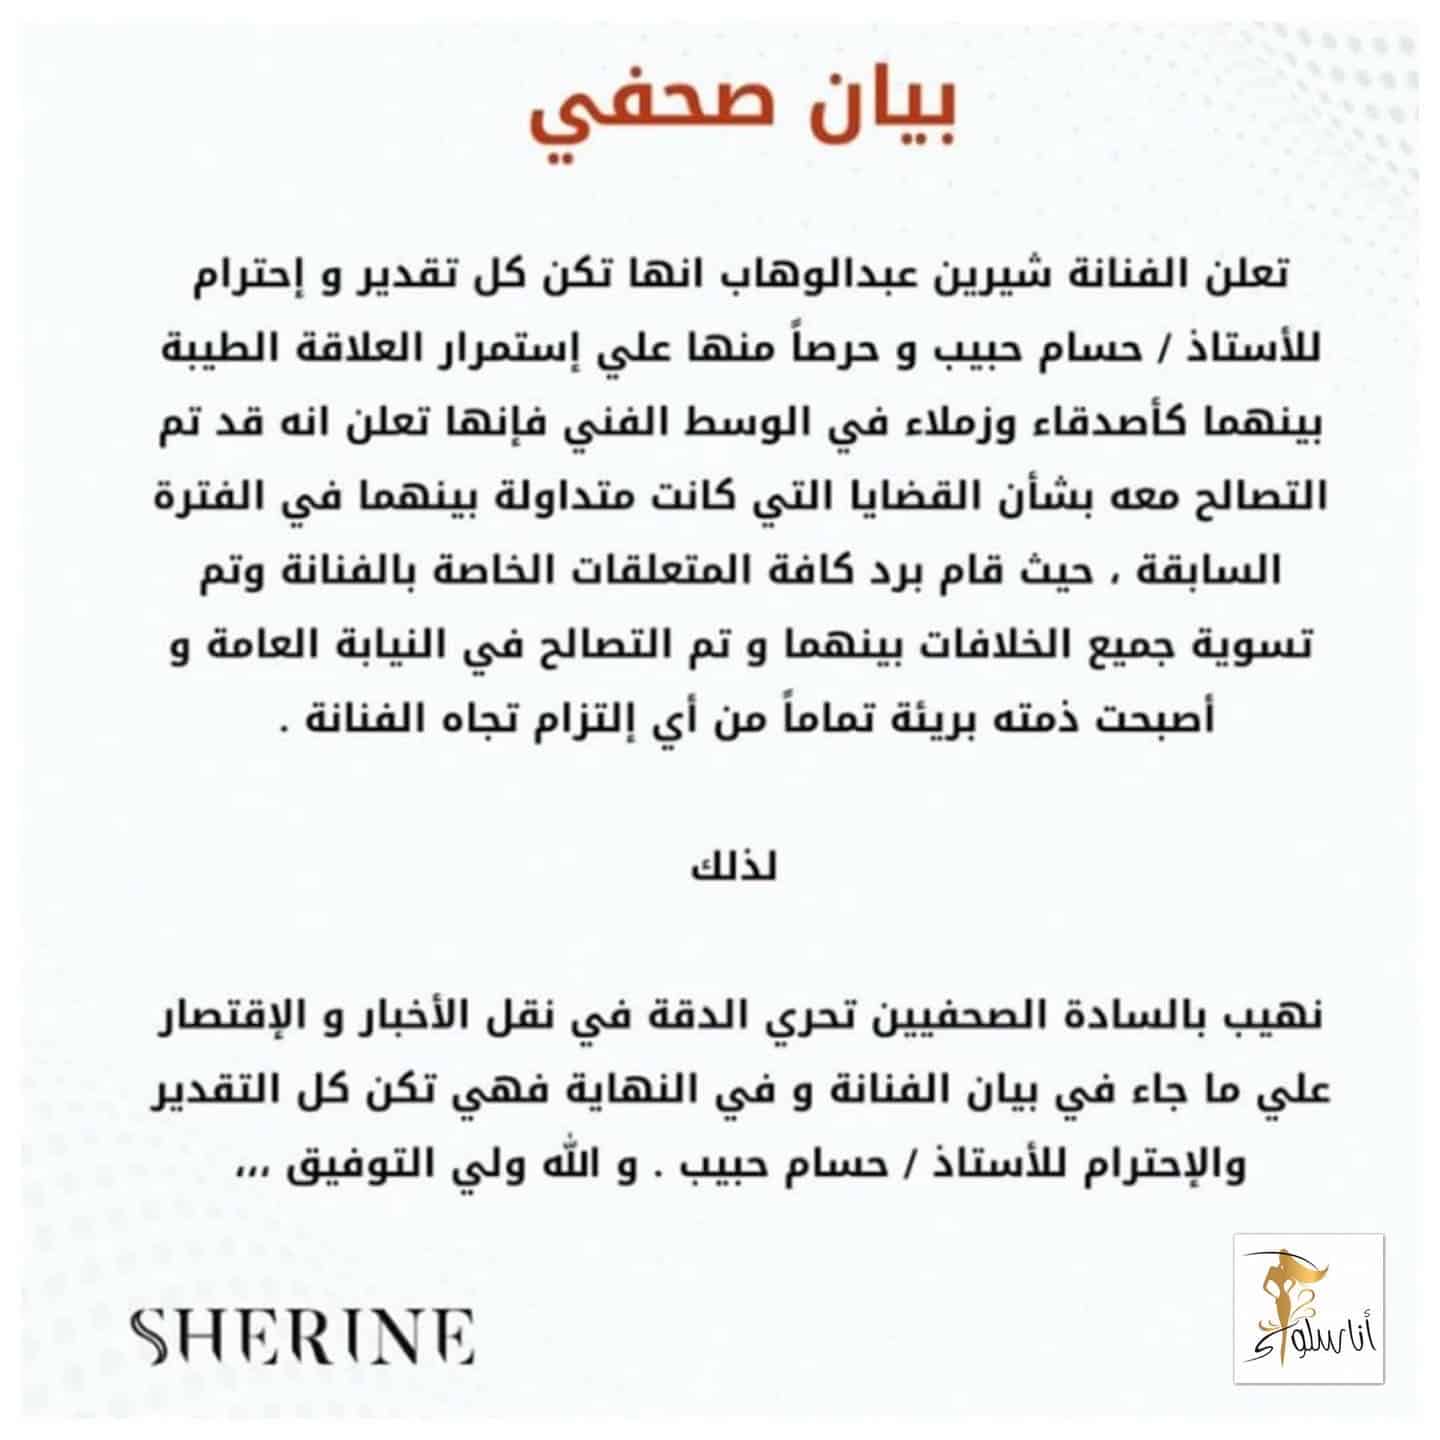 Riconciliazione Sherine Abdel Wahab e Hussam Habib